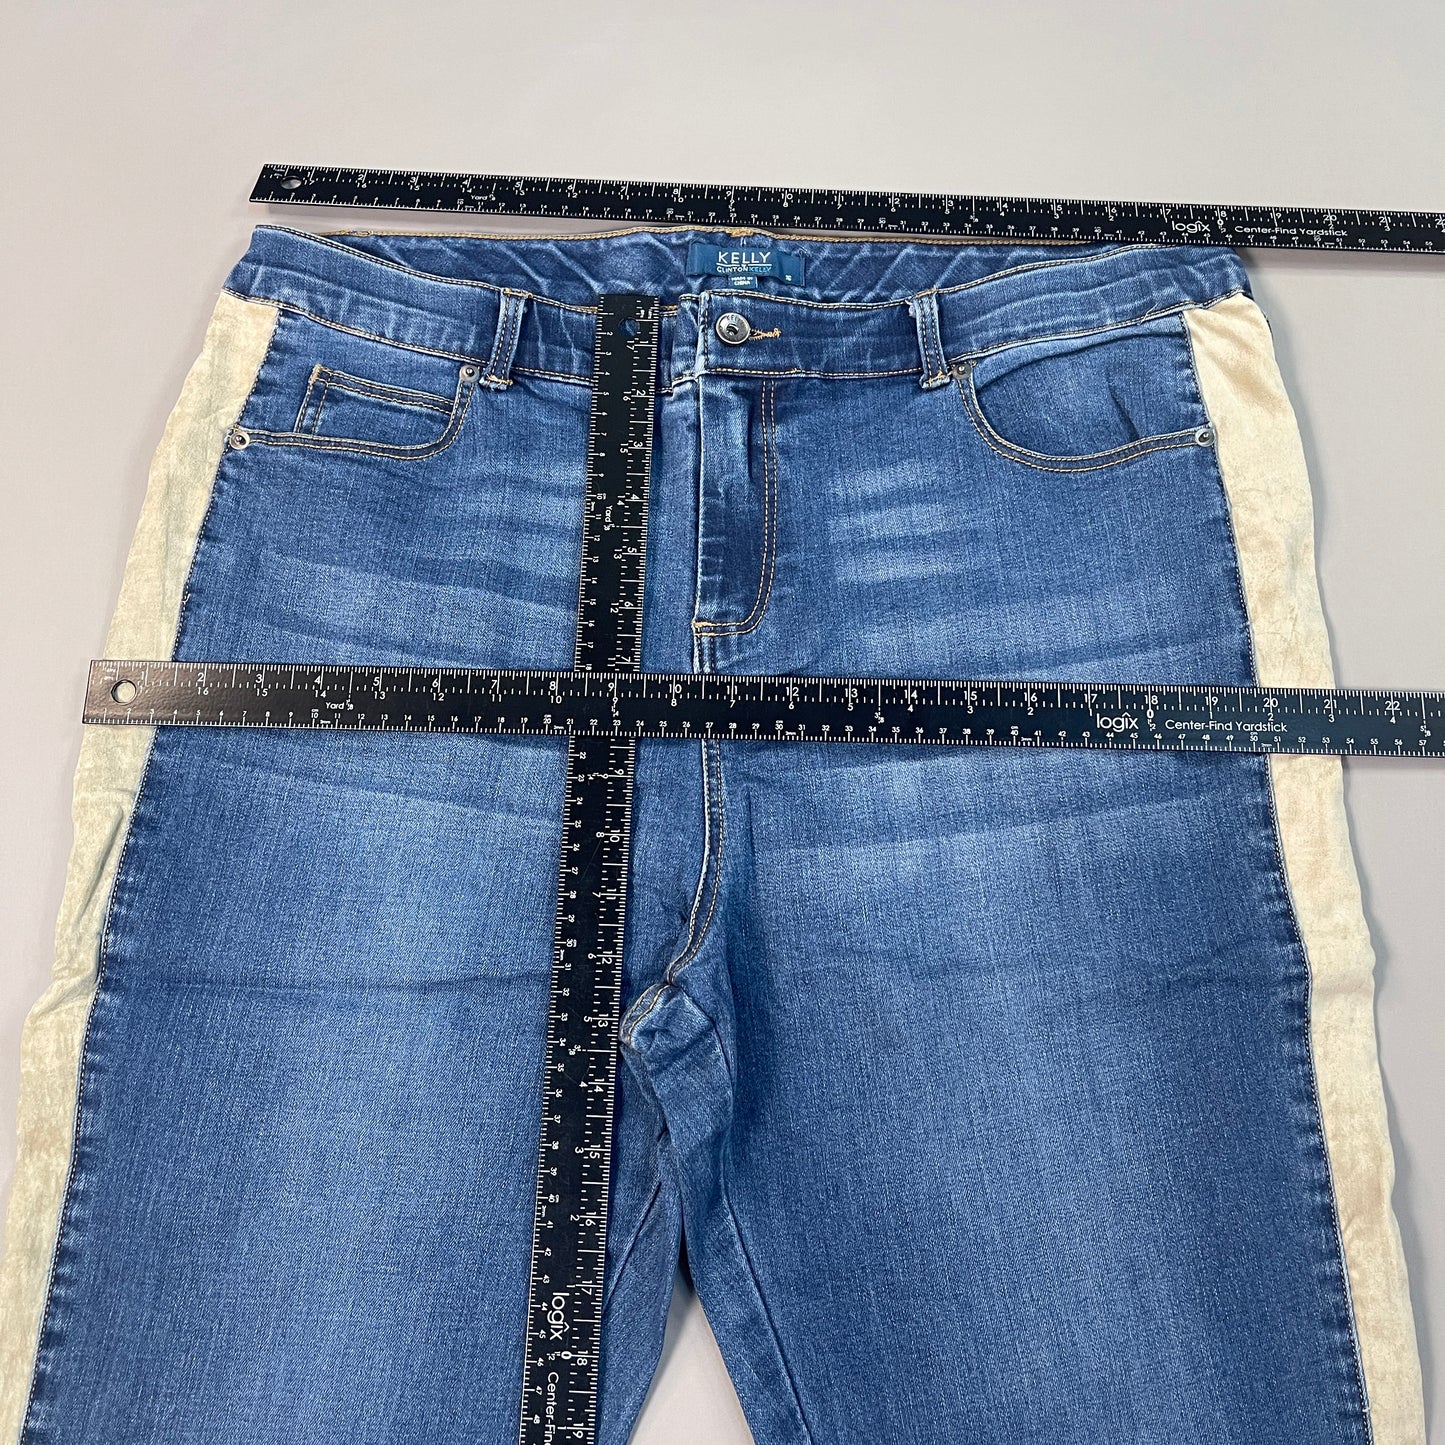 CLINTON KELLY Frayed Hem Jeans Women's Sz 16 Regular Mid Wash W/ Tan Striped Side(New)